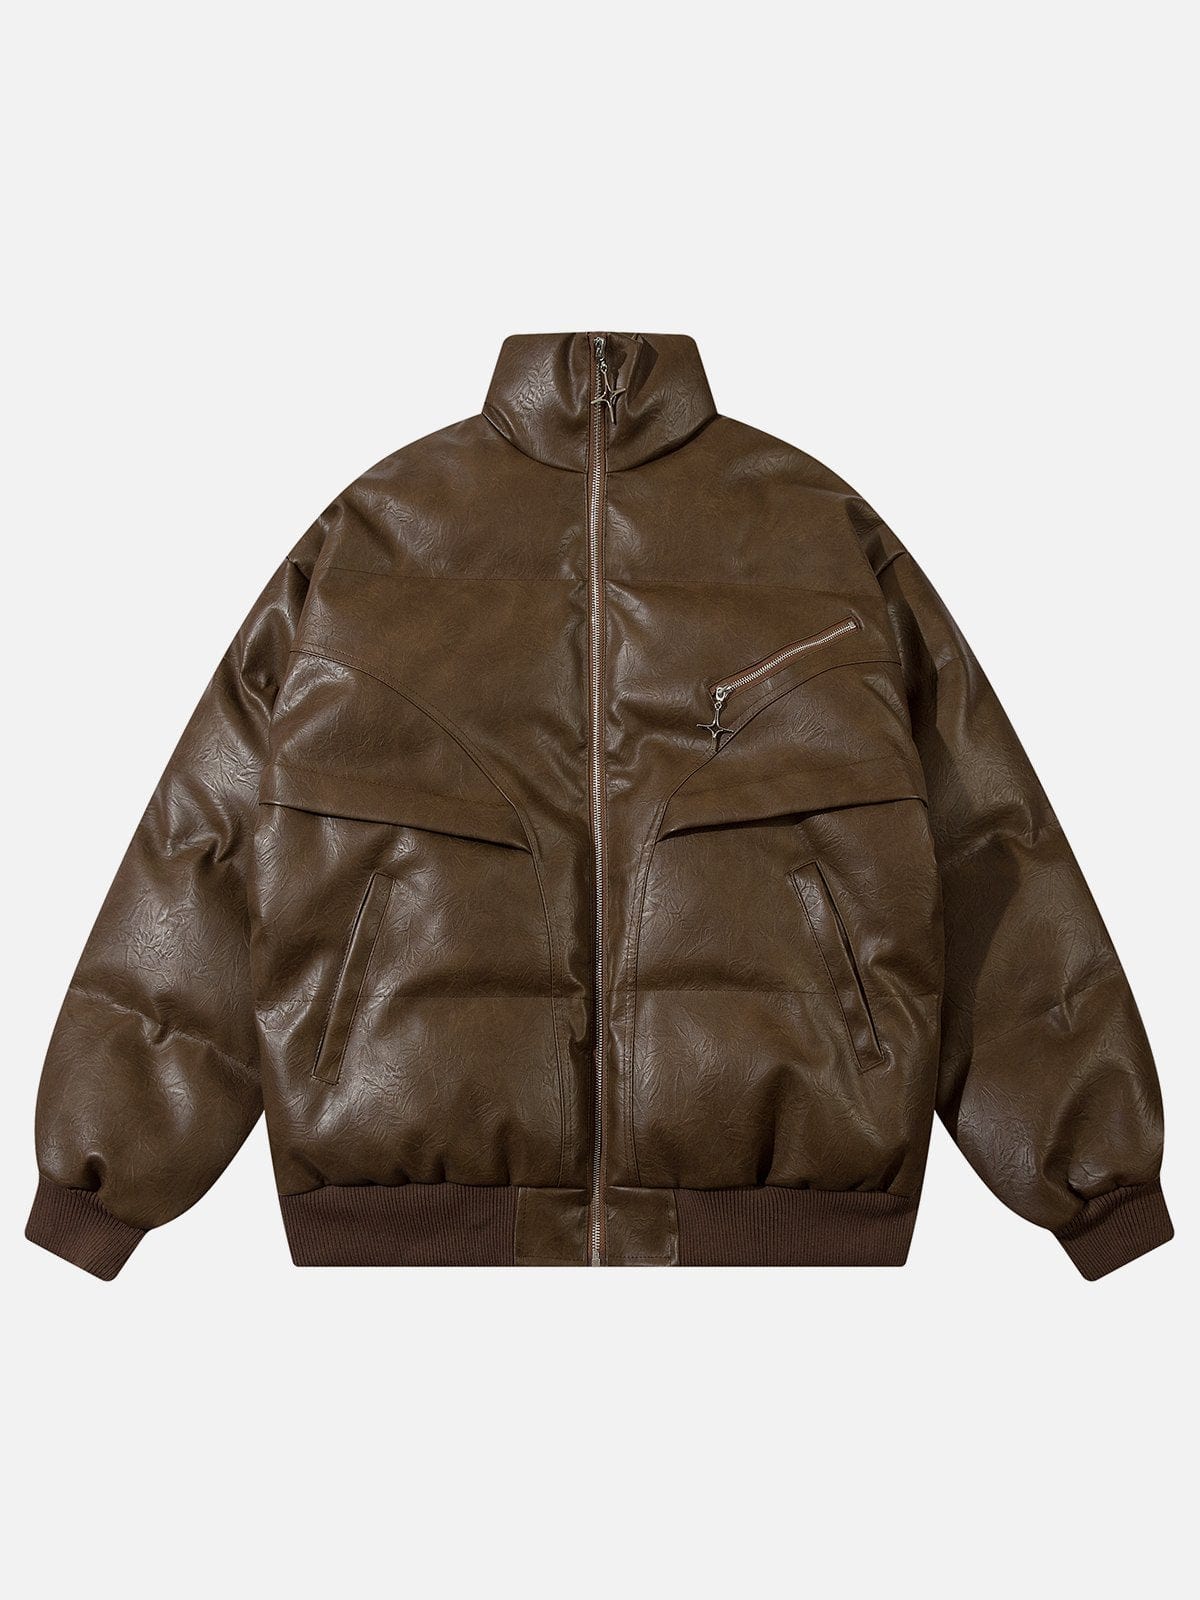 ZIP UP Elements Leather Winter Coat